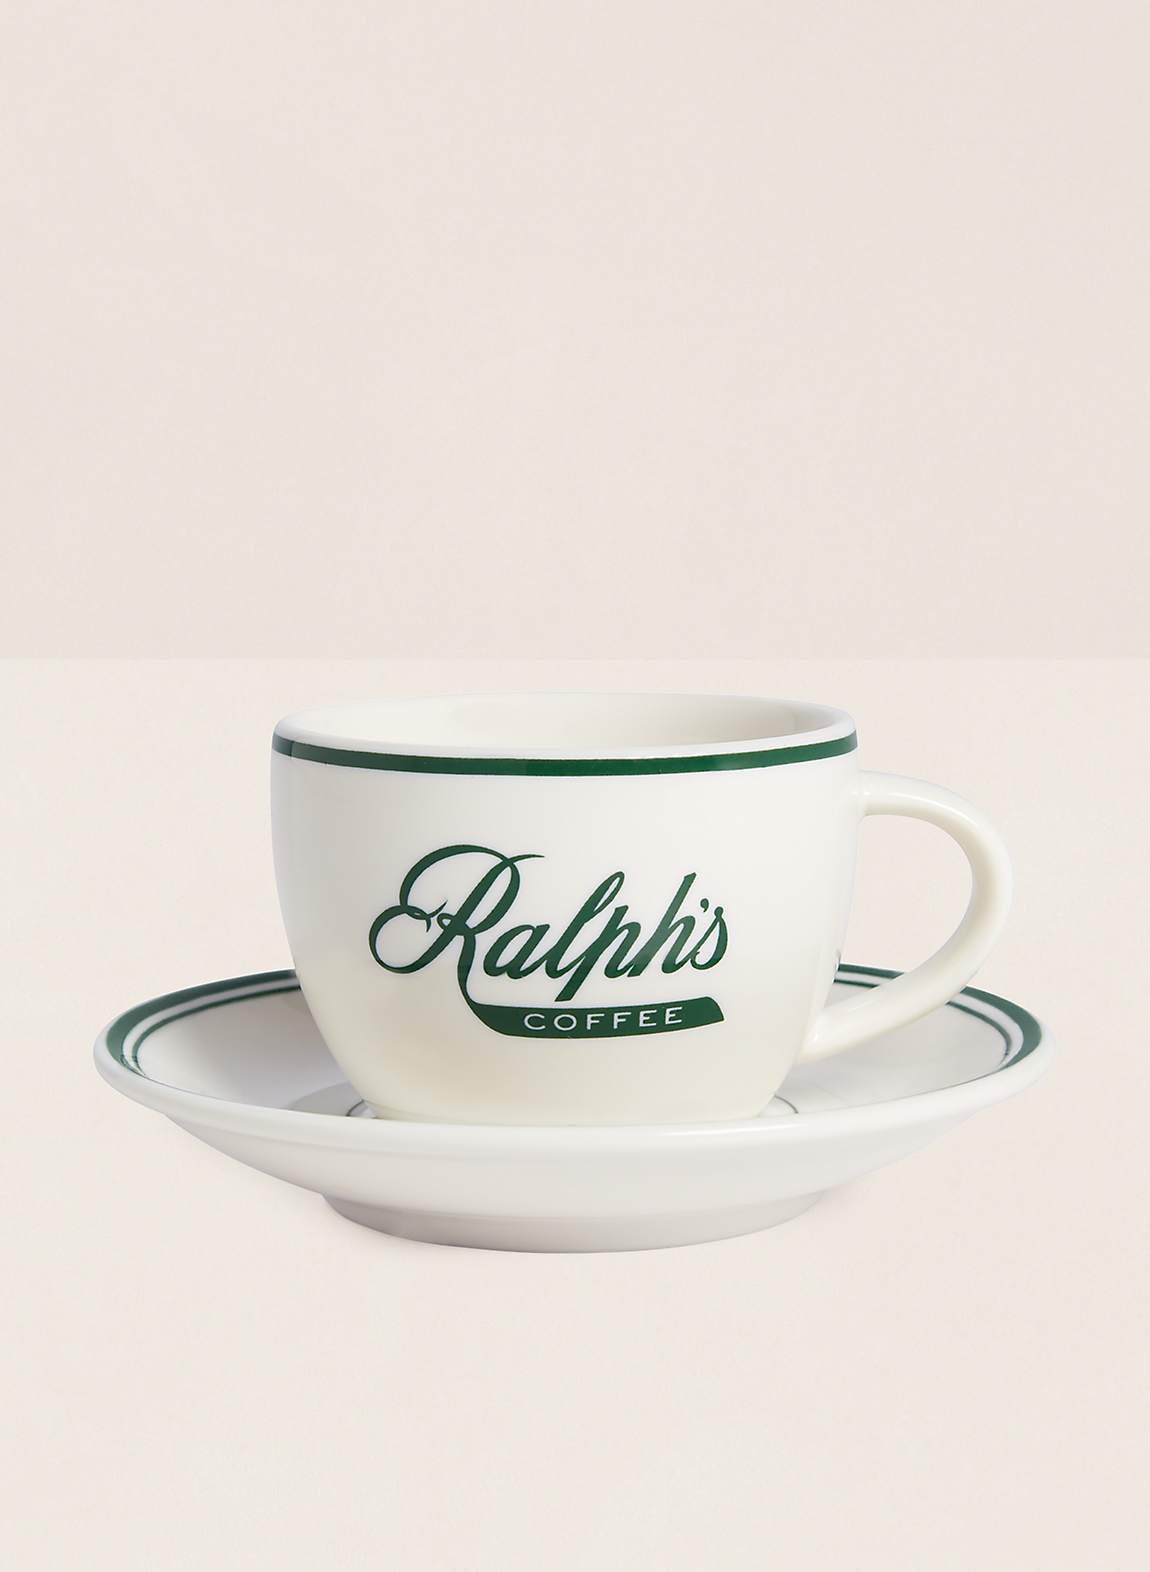 （Ralph's Coffee）エスプレッソカップ